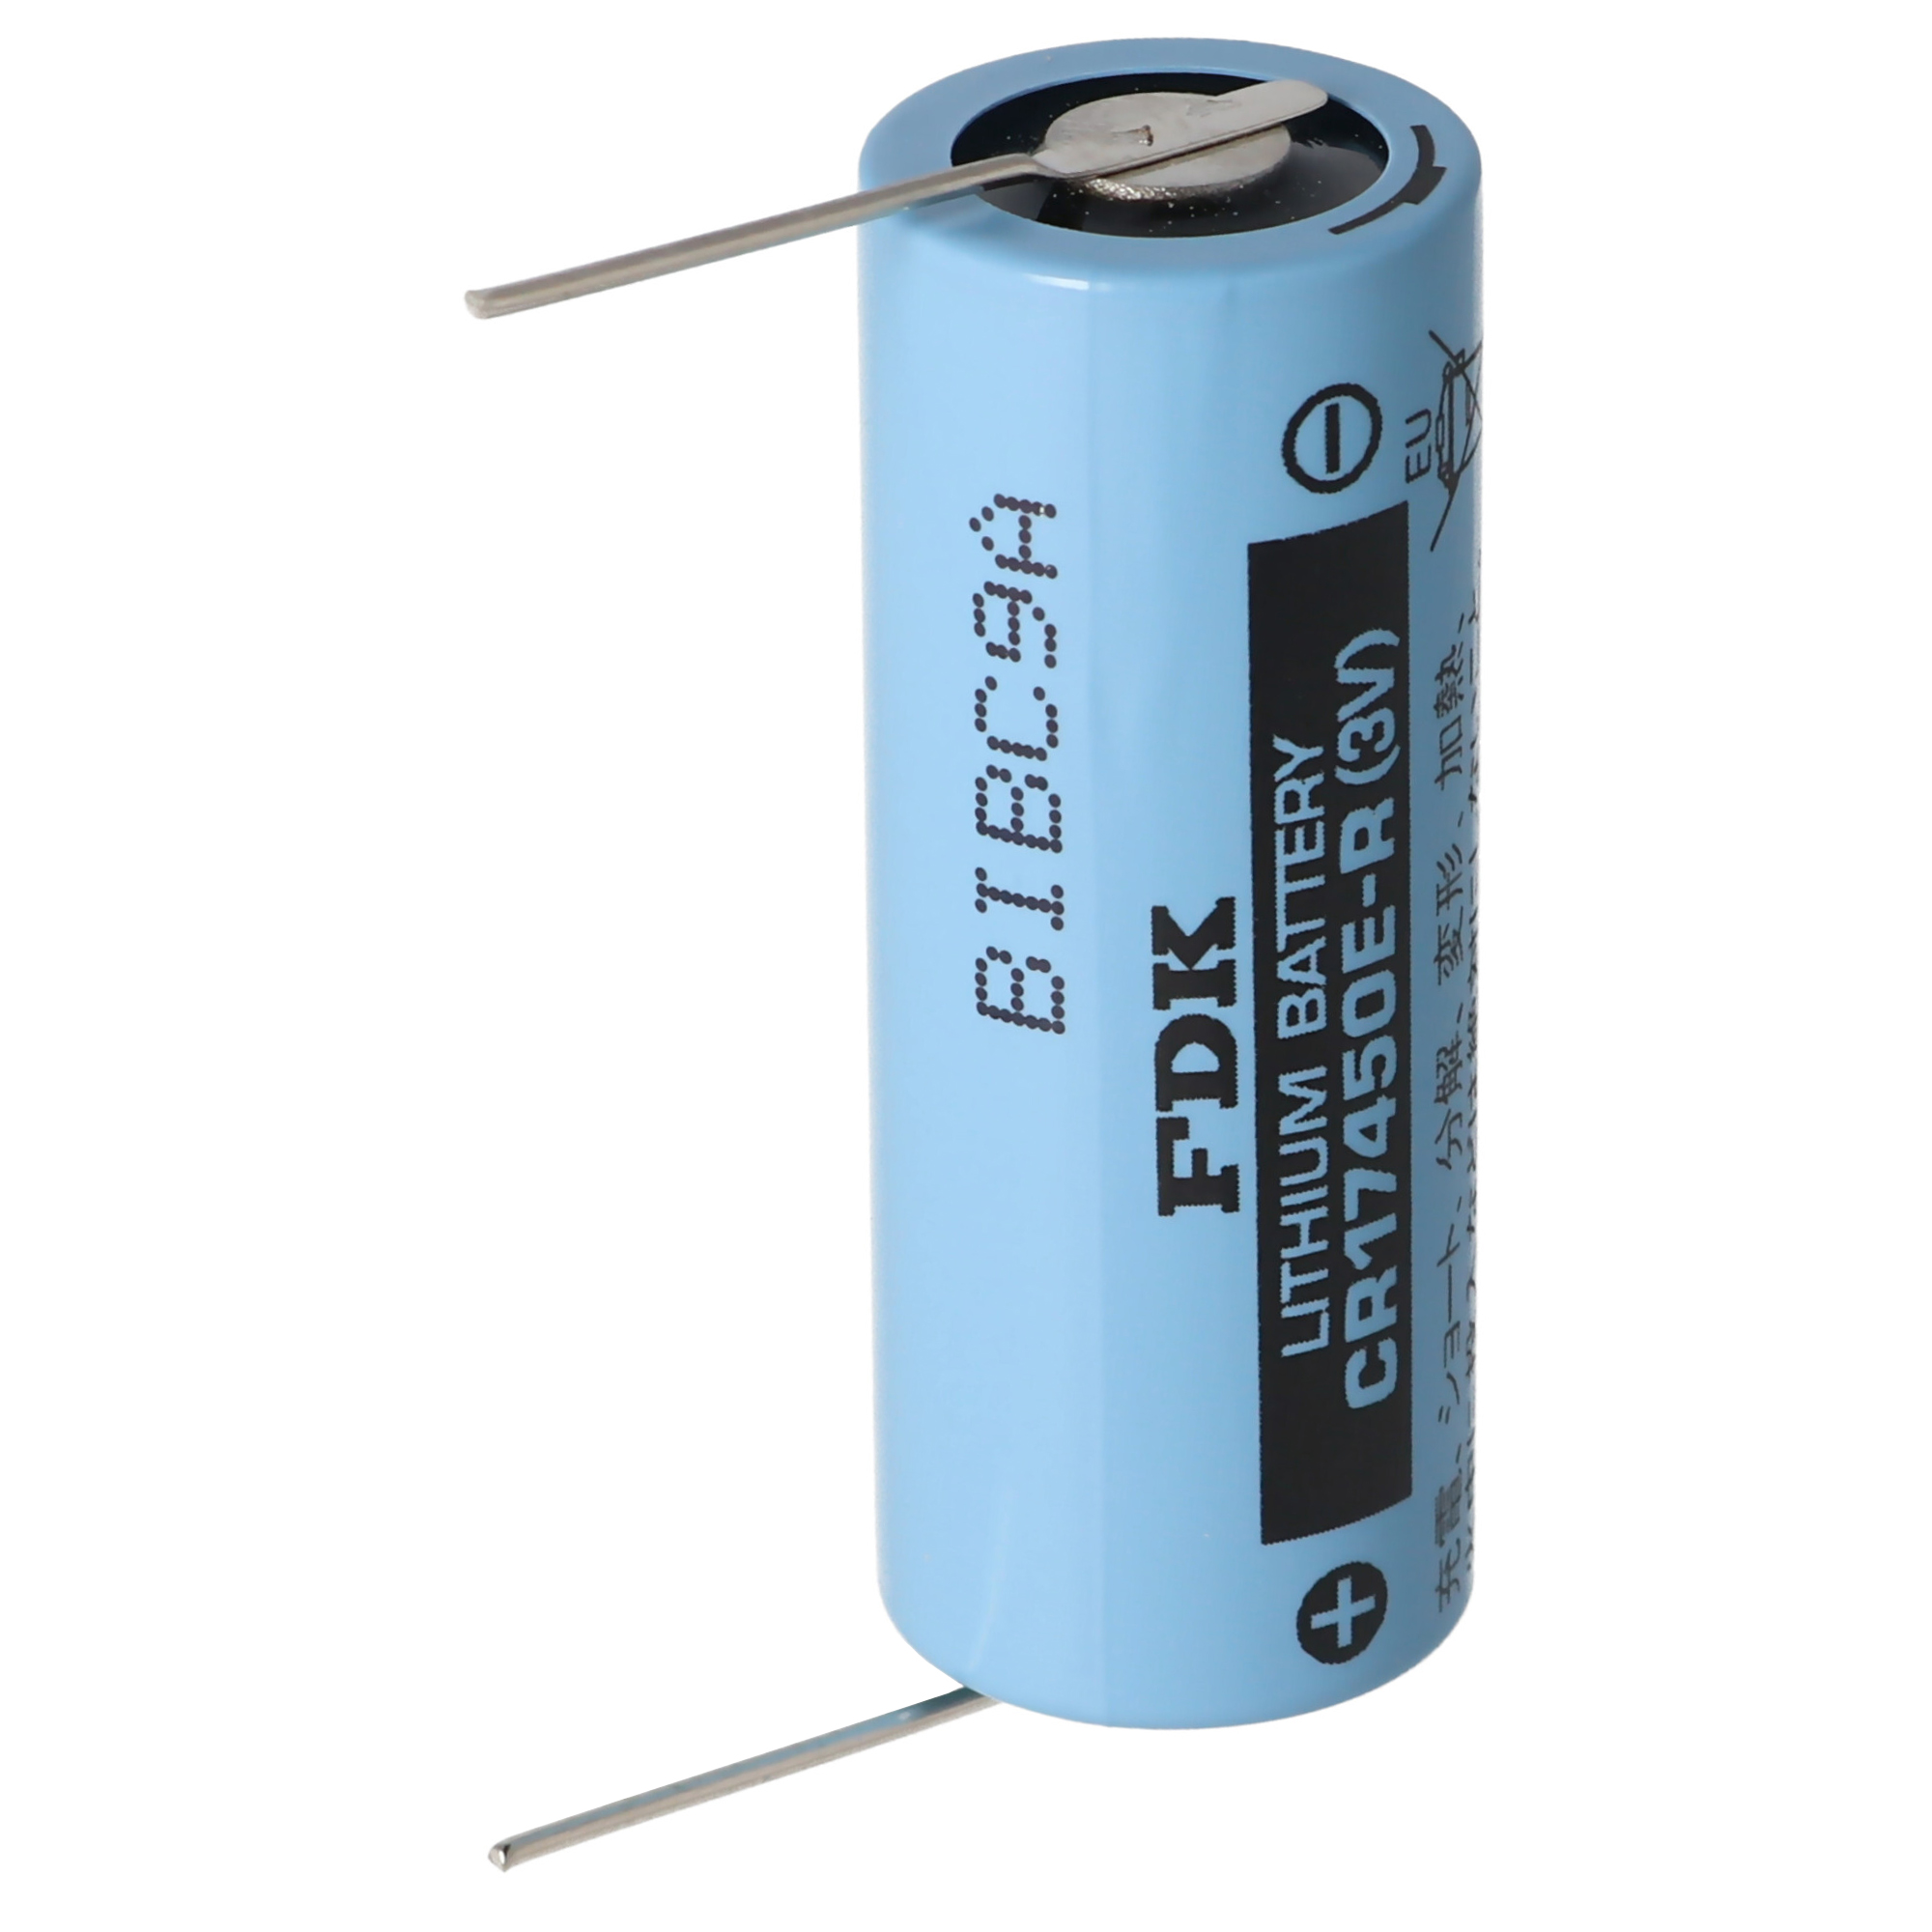 Sanyo Lithium Batterie CR17450E-R Size A, Lötdraht (Lötpaddel) von FDK